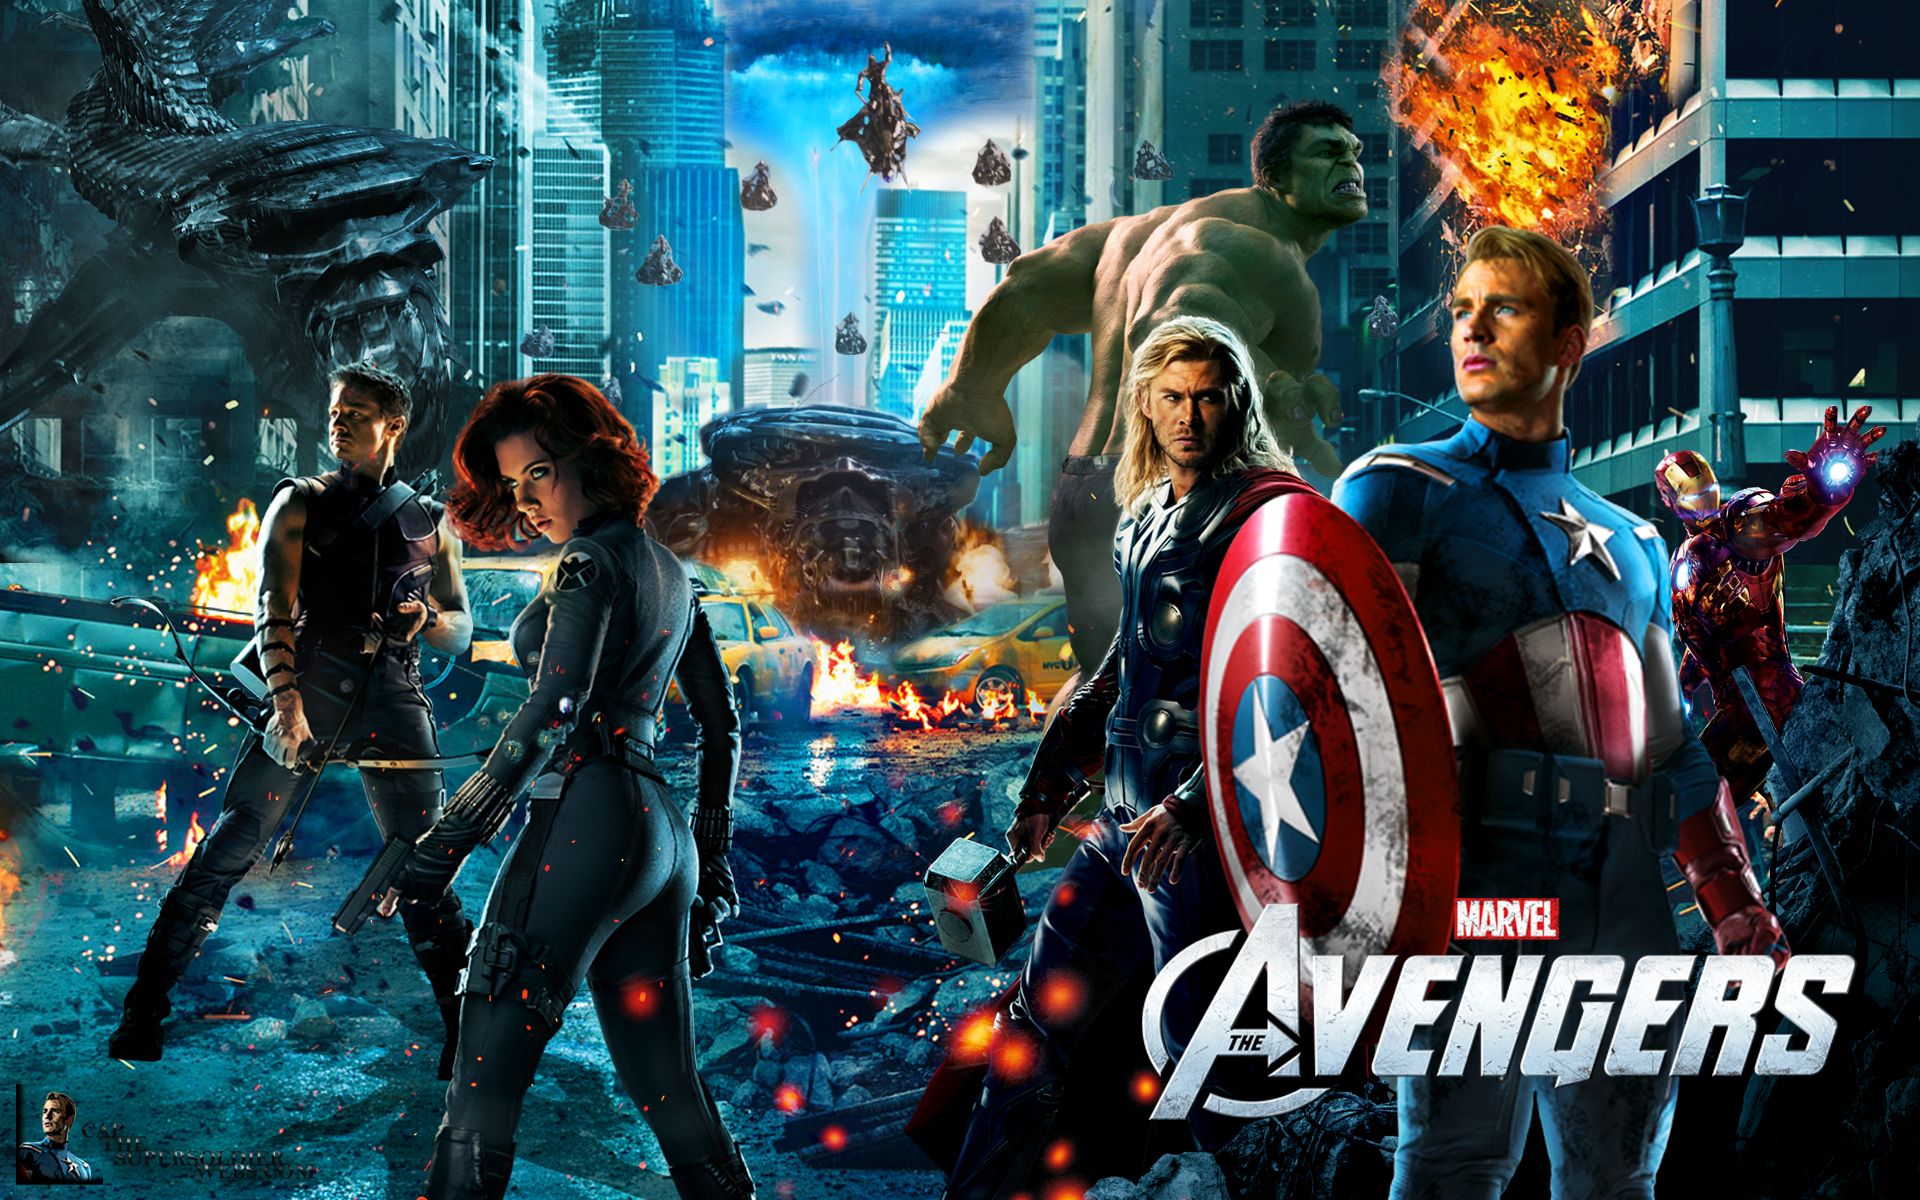 Marvel The Avengers Age Of Ultroniron Battle Poster Art Hd Wallpaper For  Desktop 4096x2560  Wallpapers13com